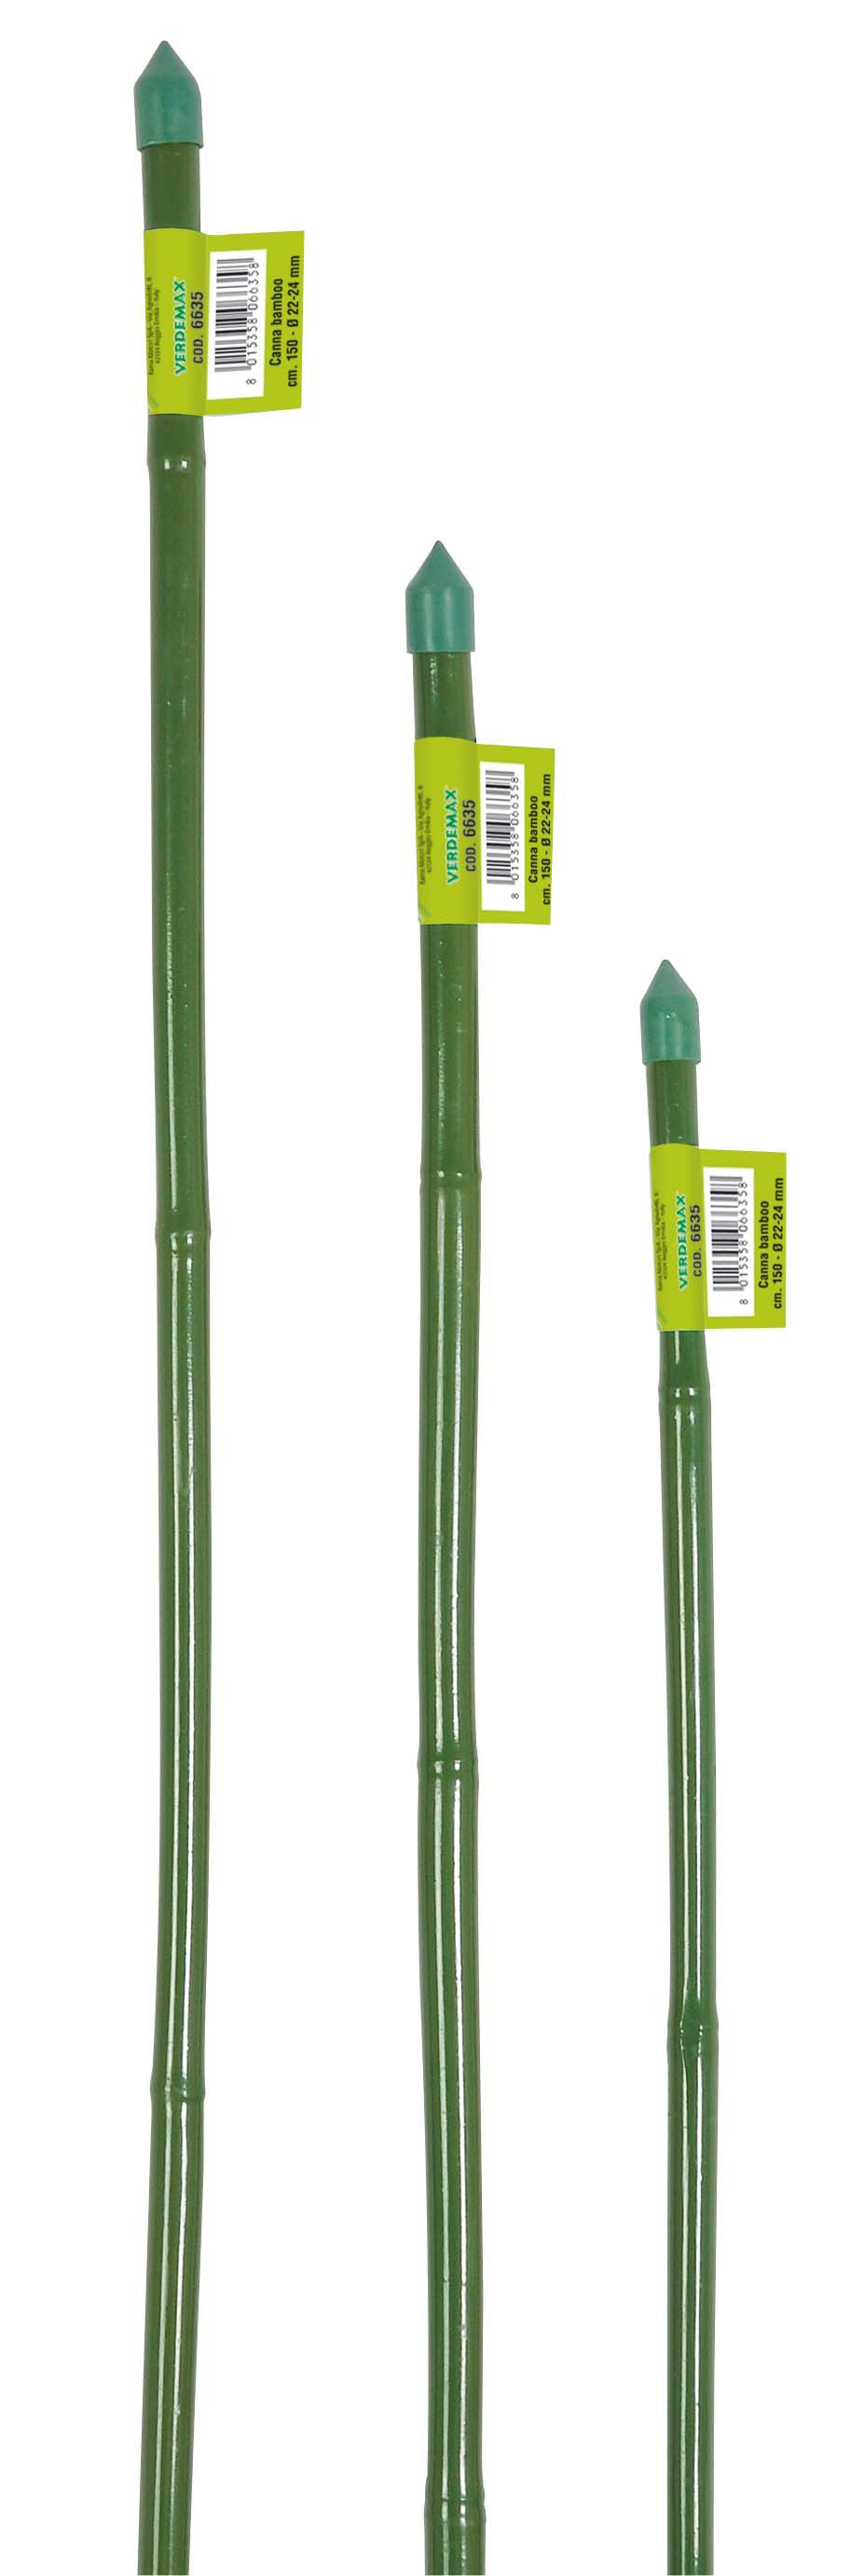 Tutore in bamboo plastificato cm 100 d. 8-10